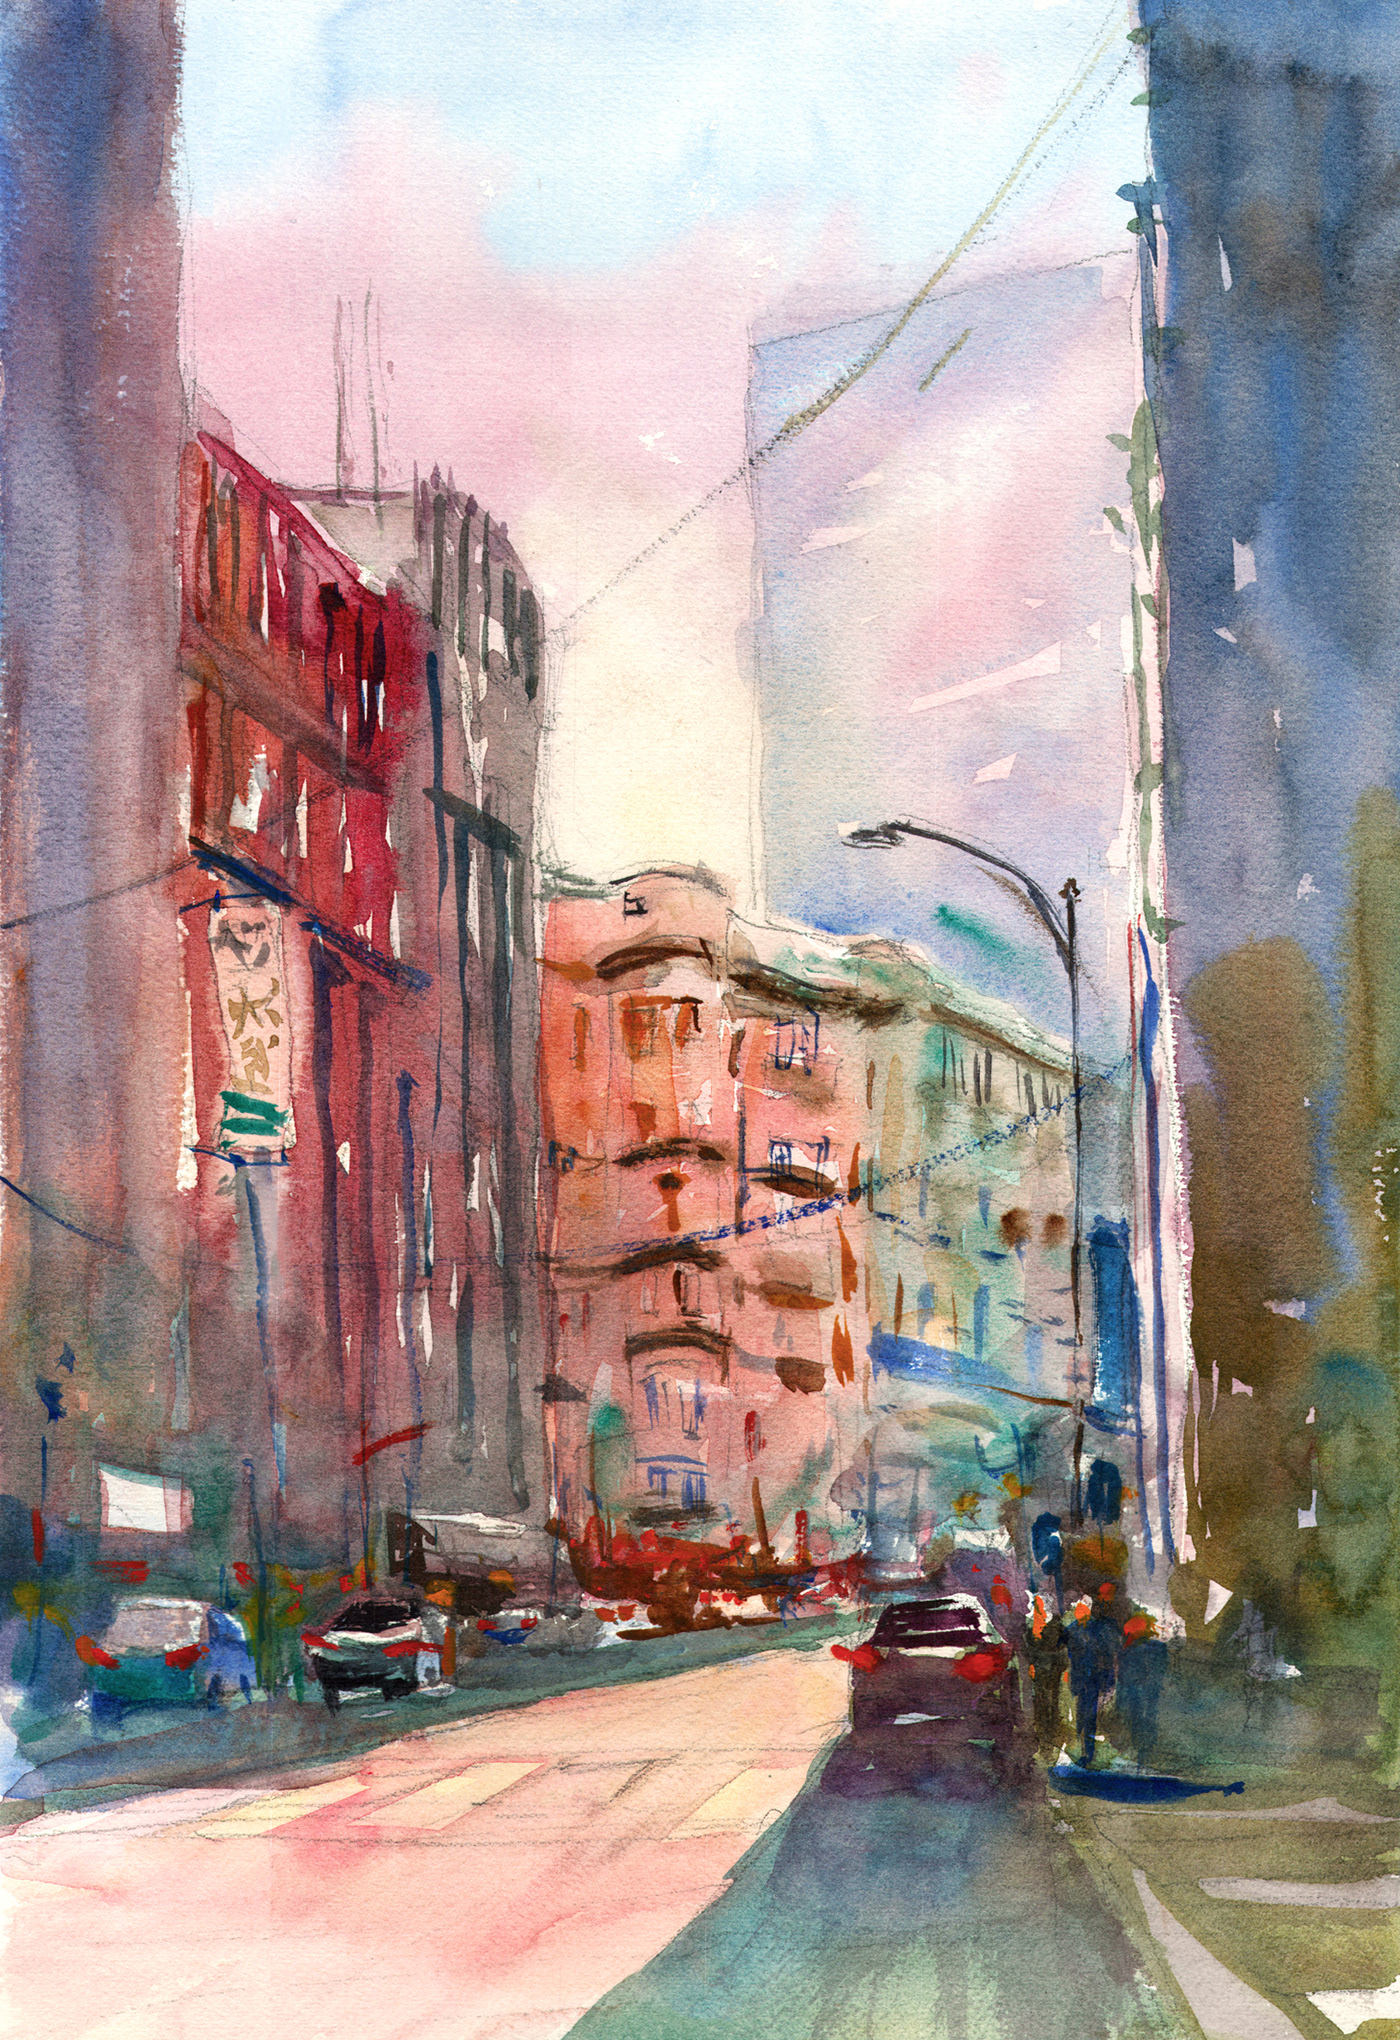 Landscape watercolor painting   cityscape Urban impressionism